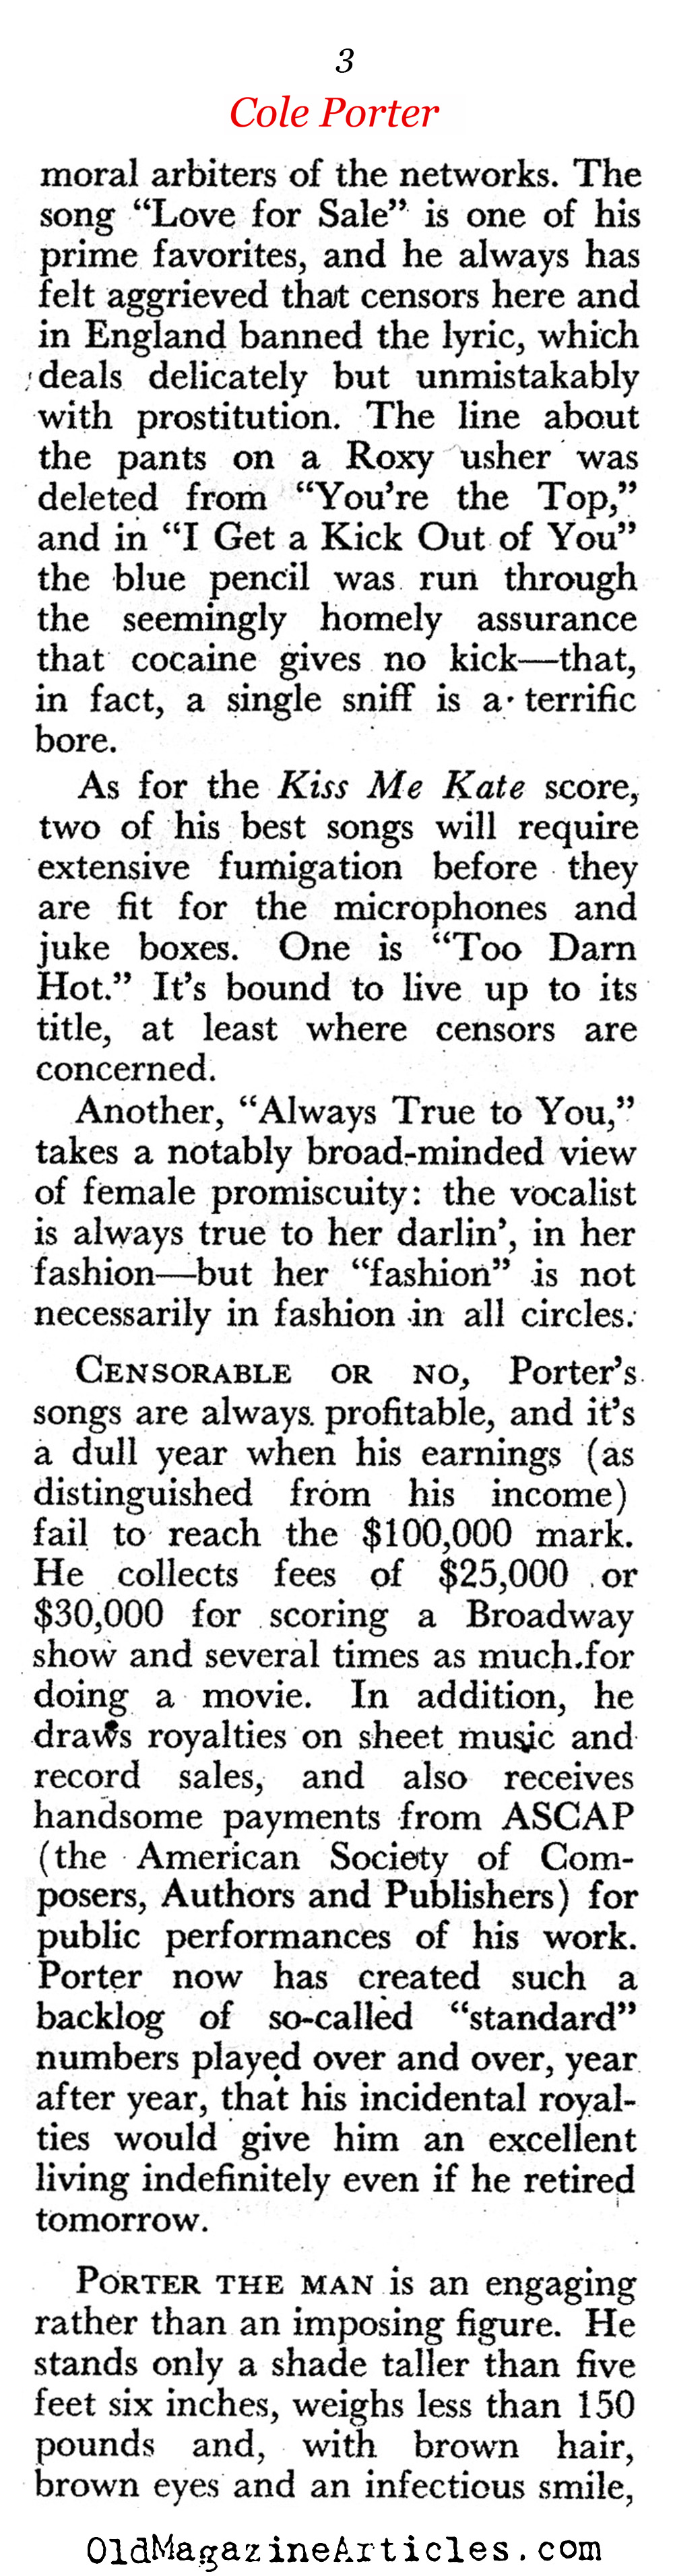 Cole Porter (Pageant Magazine, 1949)